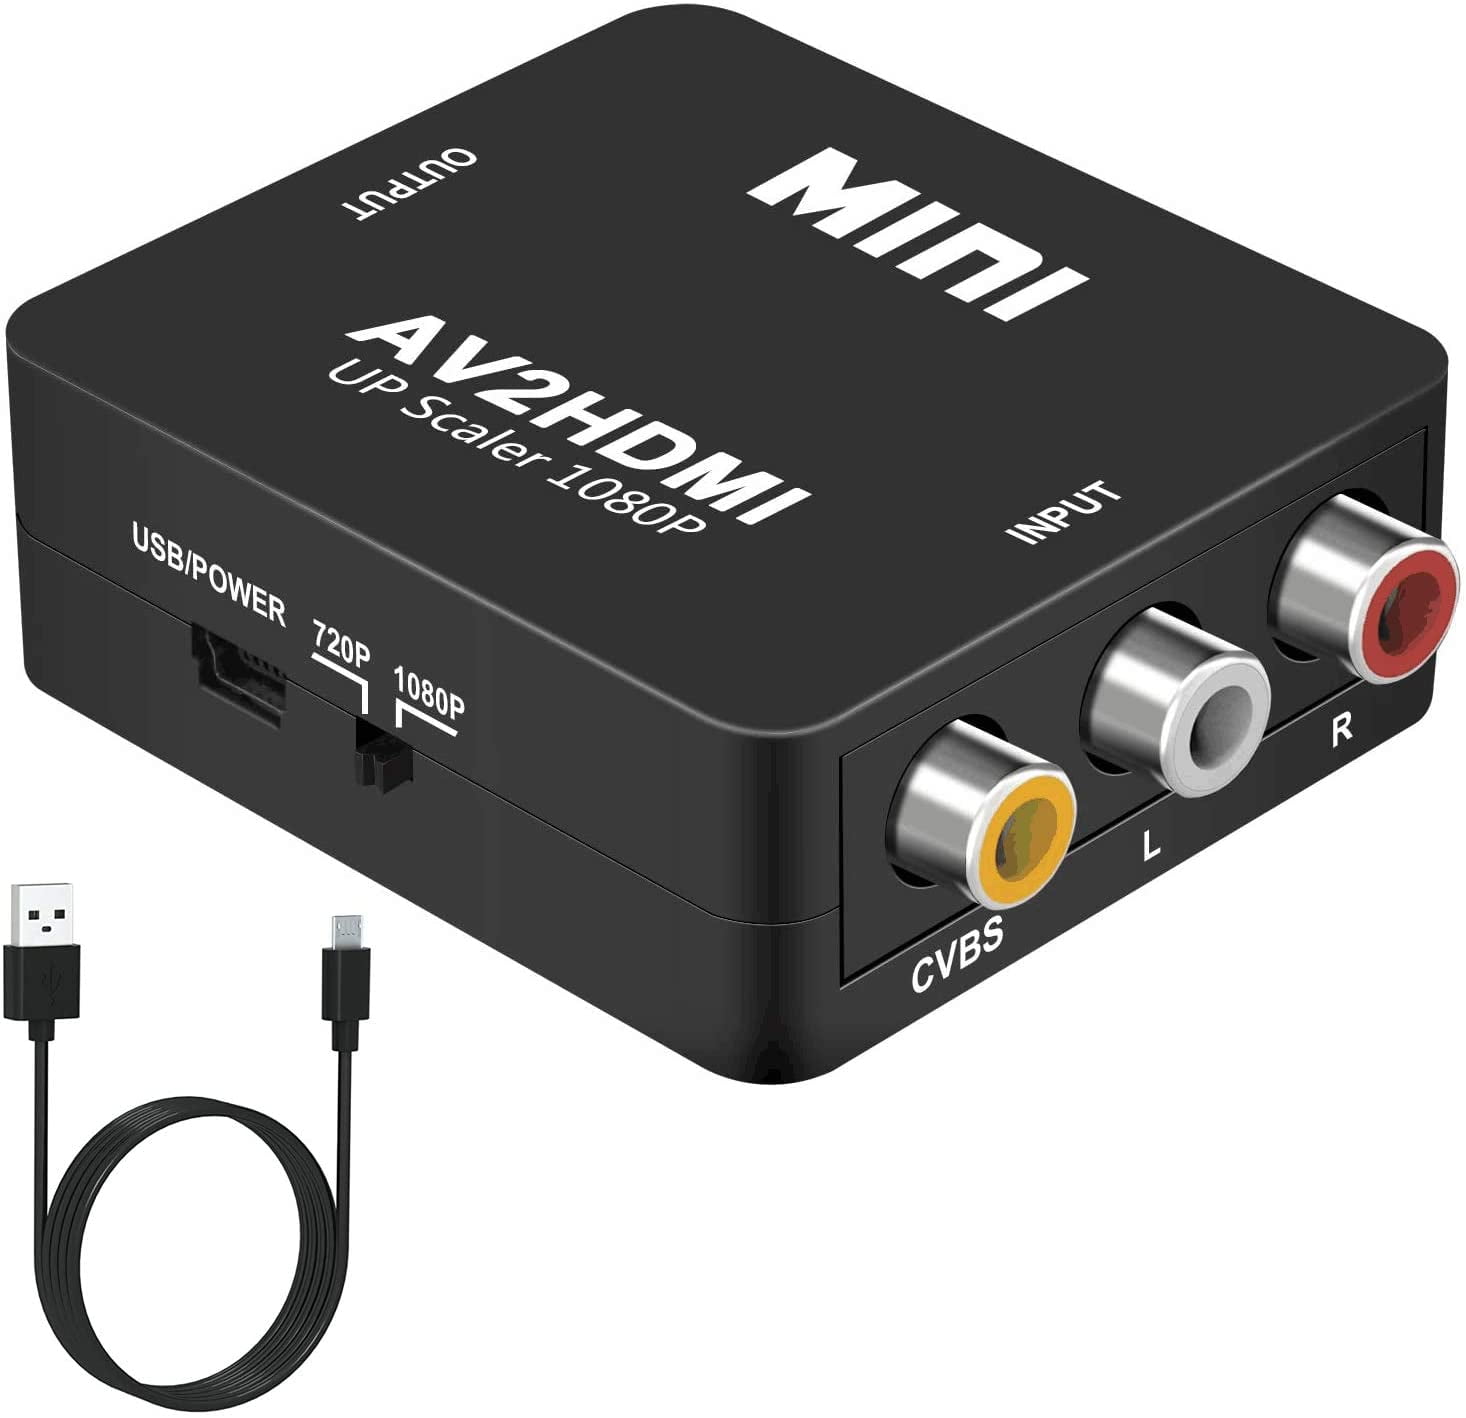 HDMI to RCA, 1080p HDMI to AV 3RCA CVBs Composite Video Audio